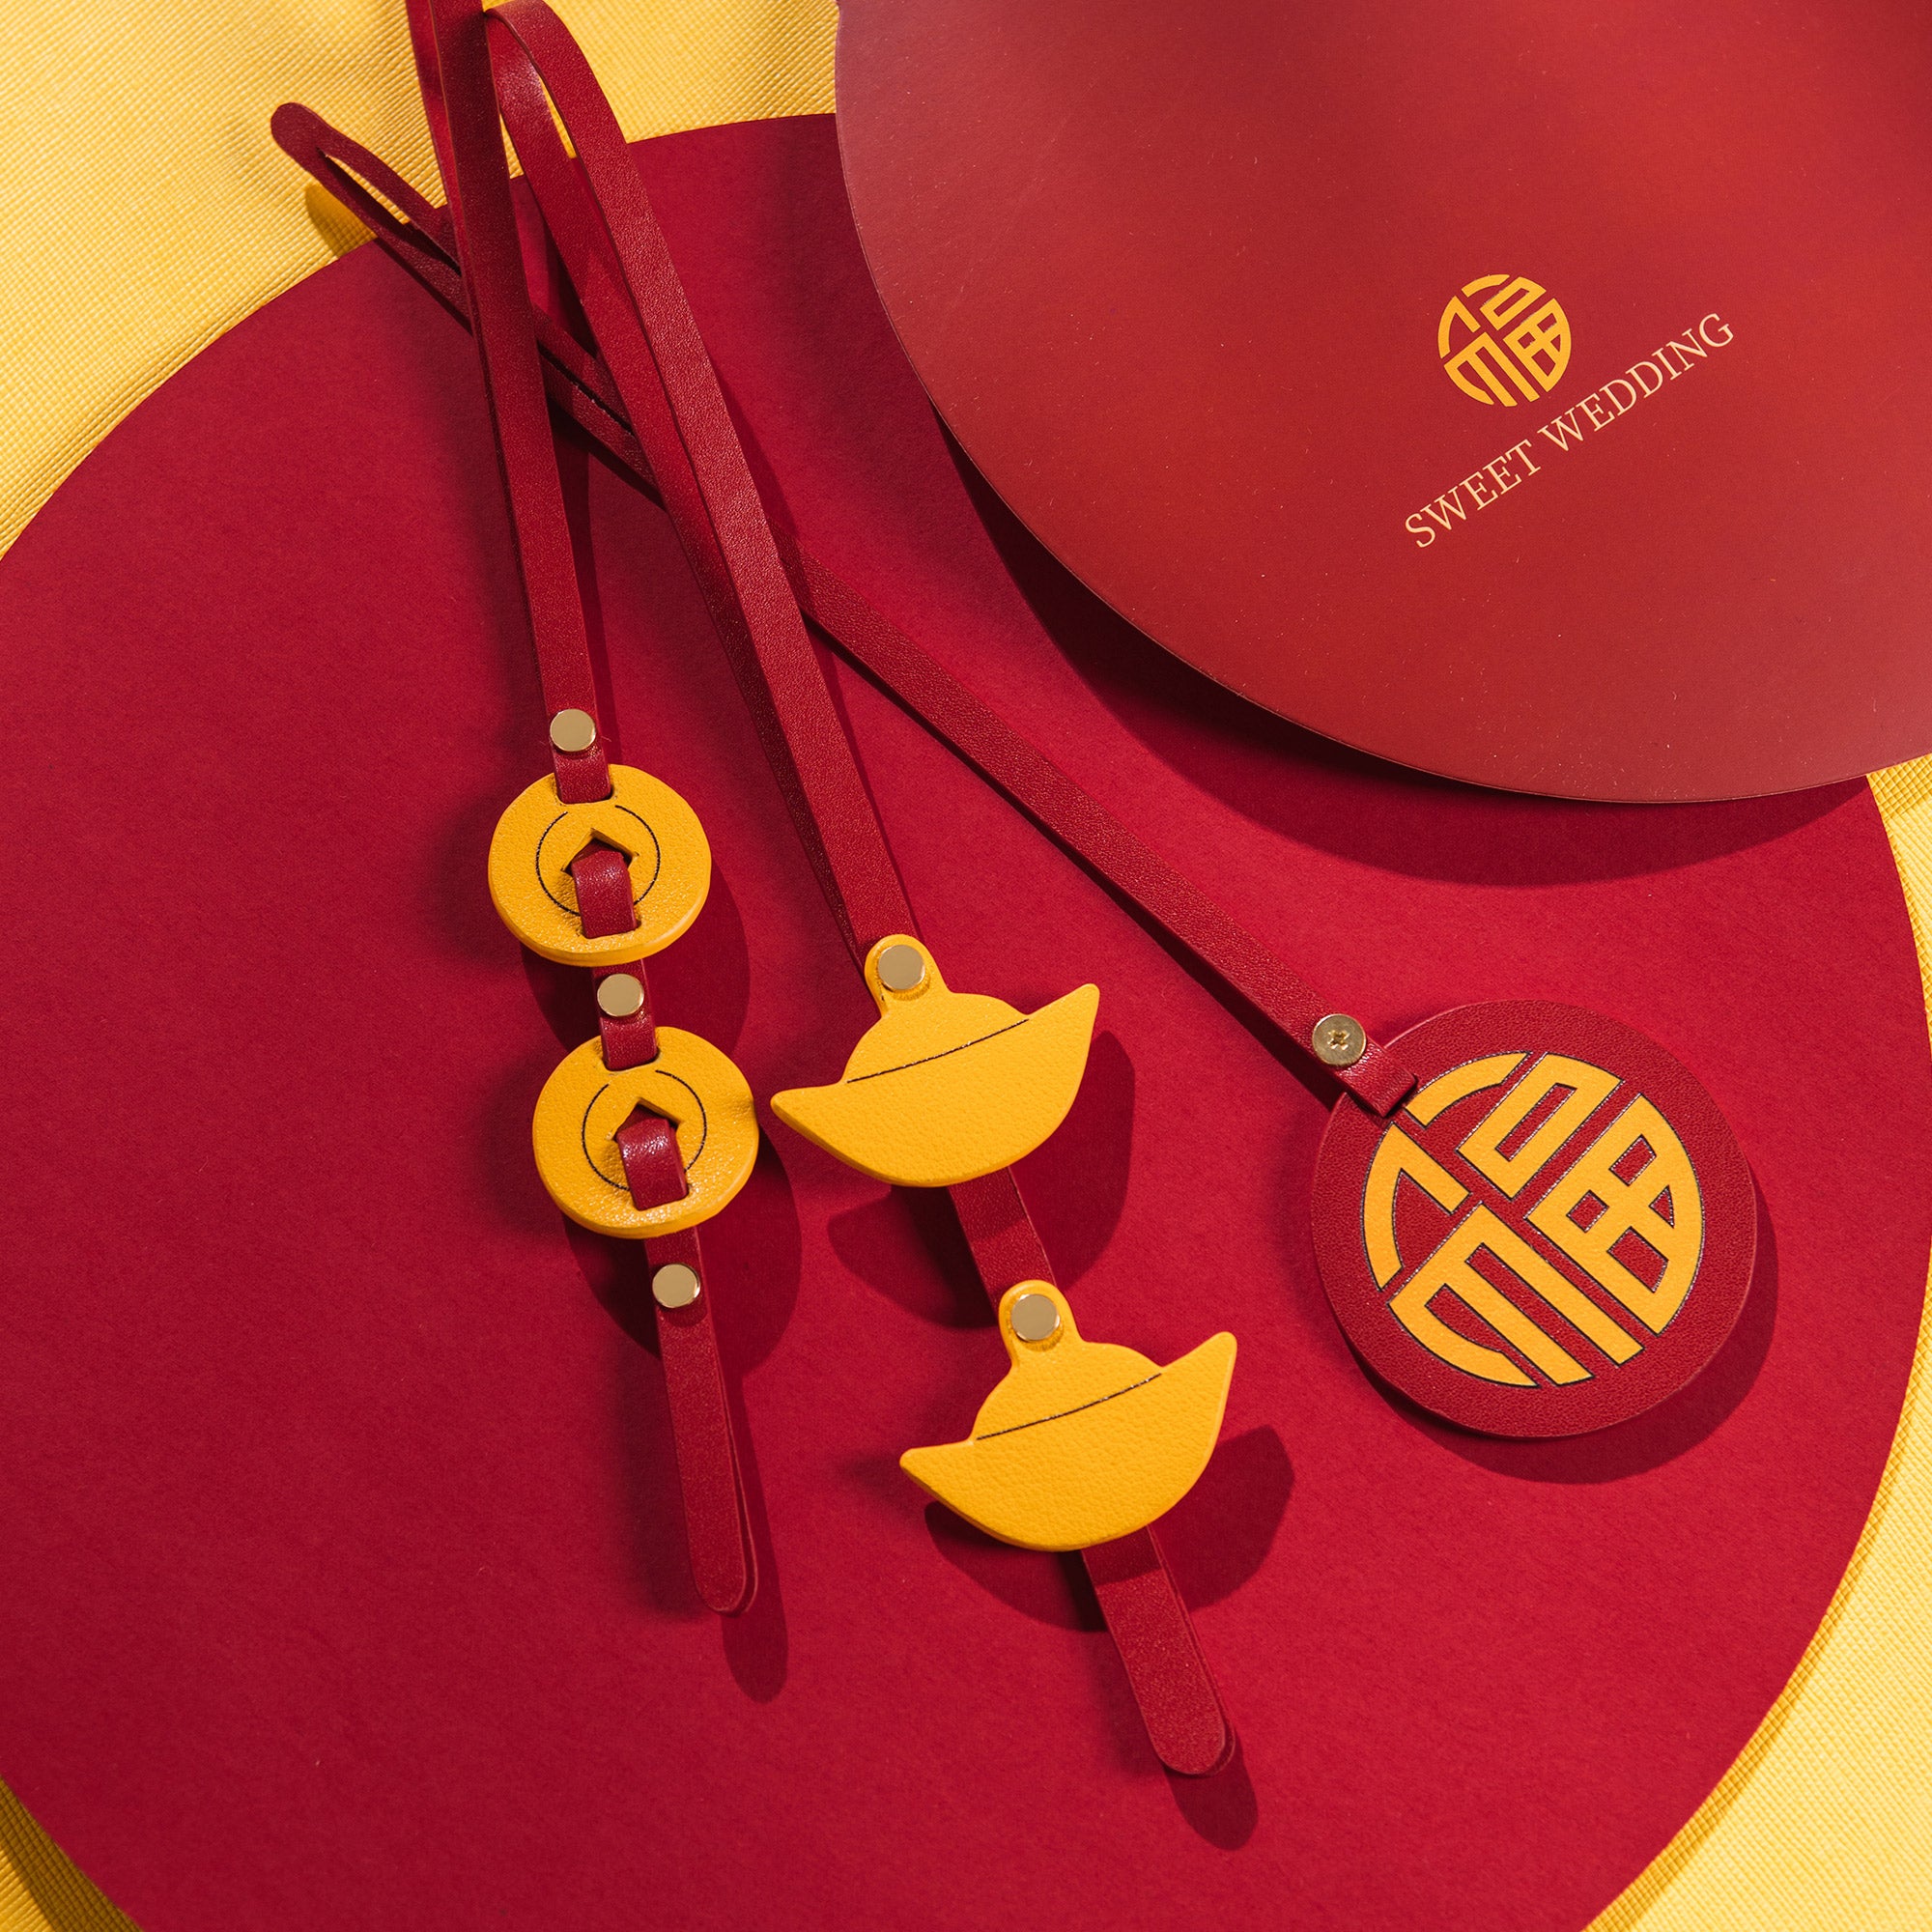 DIY Kits - Chinese Blessing Ornaments